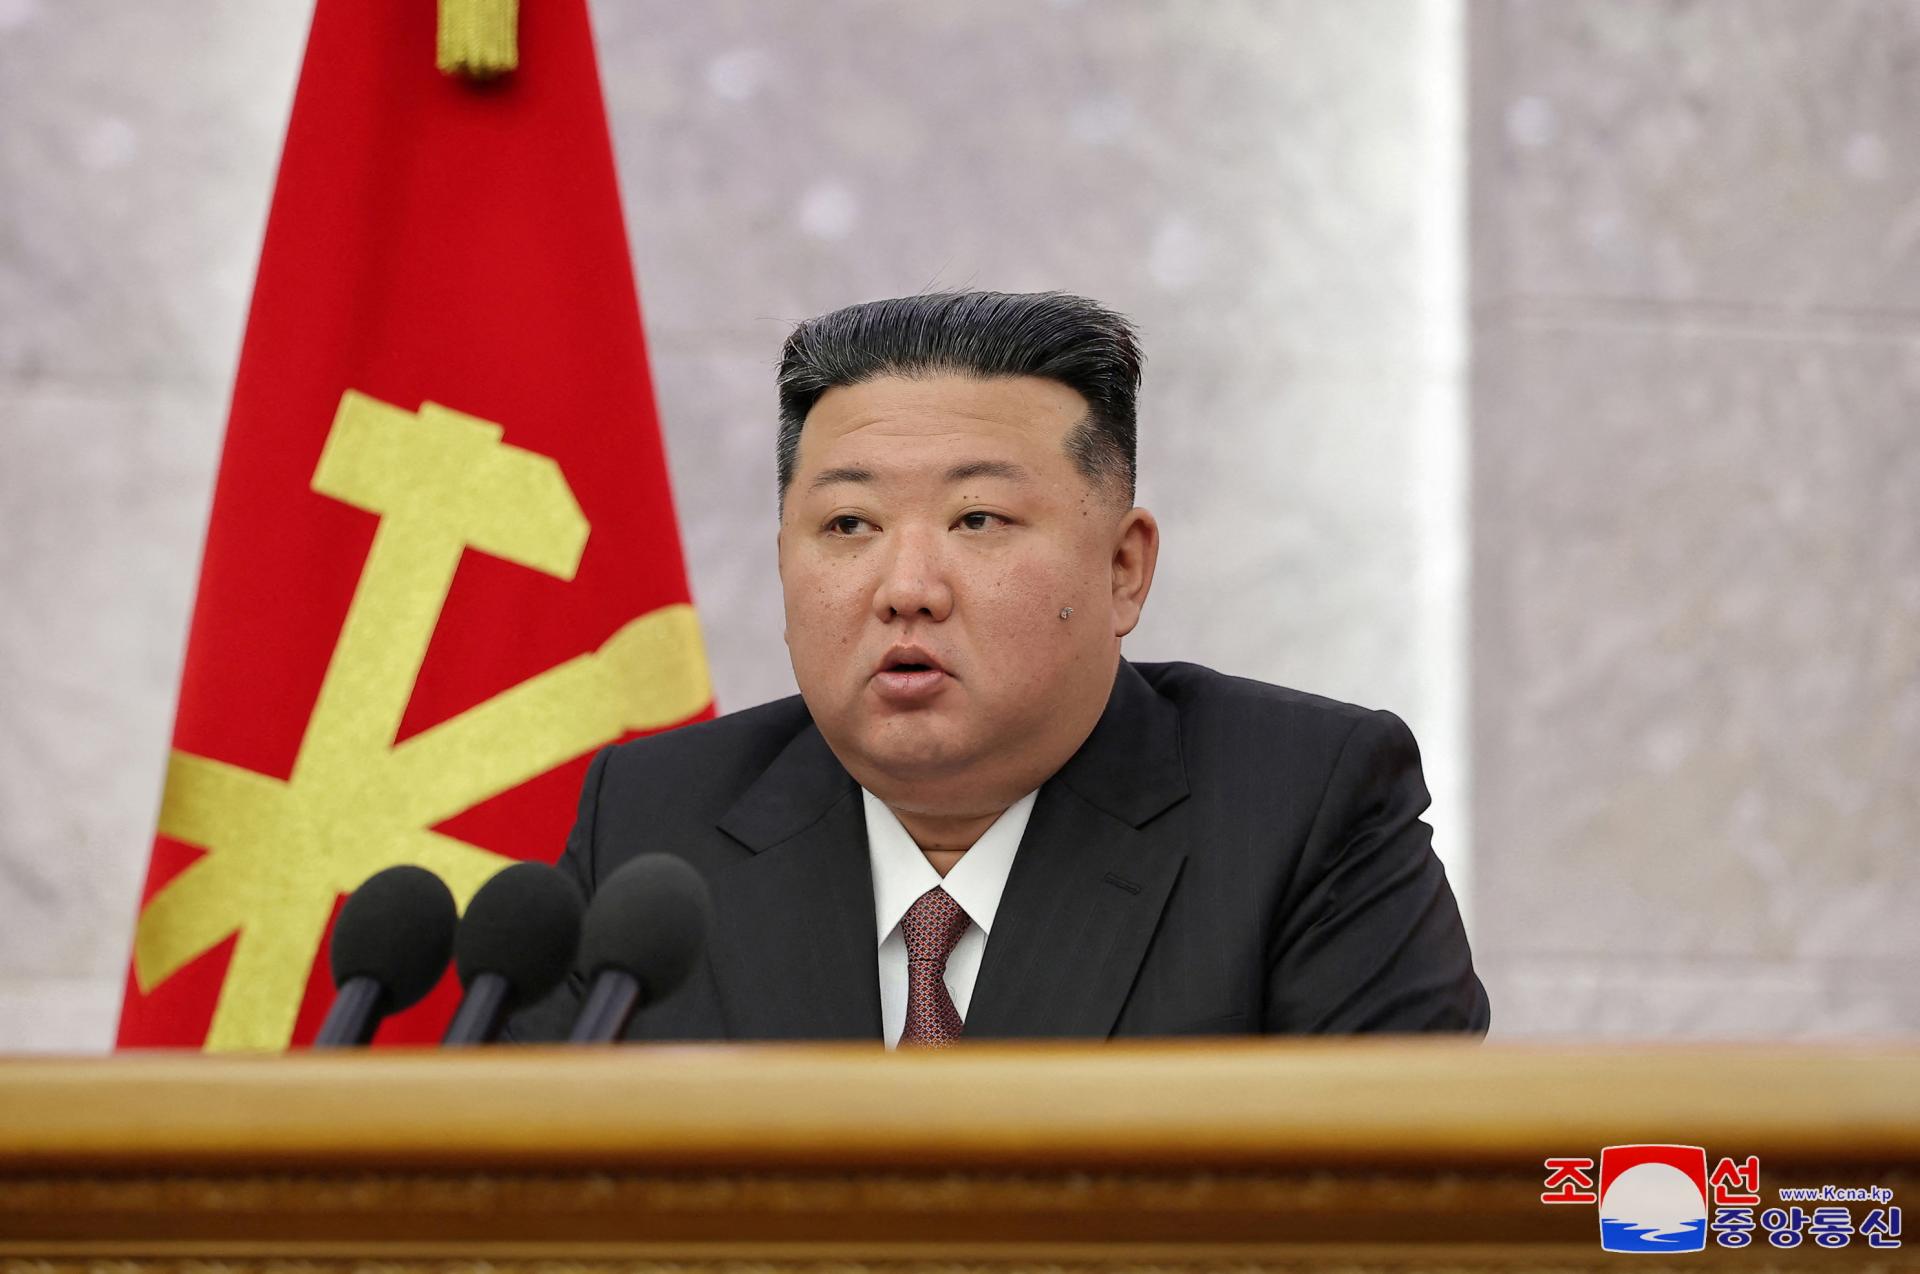 Obyvatelia KĽDR nosia odznaky s Kim Čong-unom, kult jeho osobnosti rastie